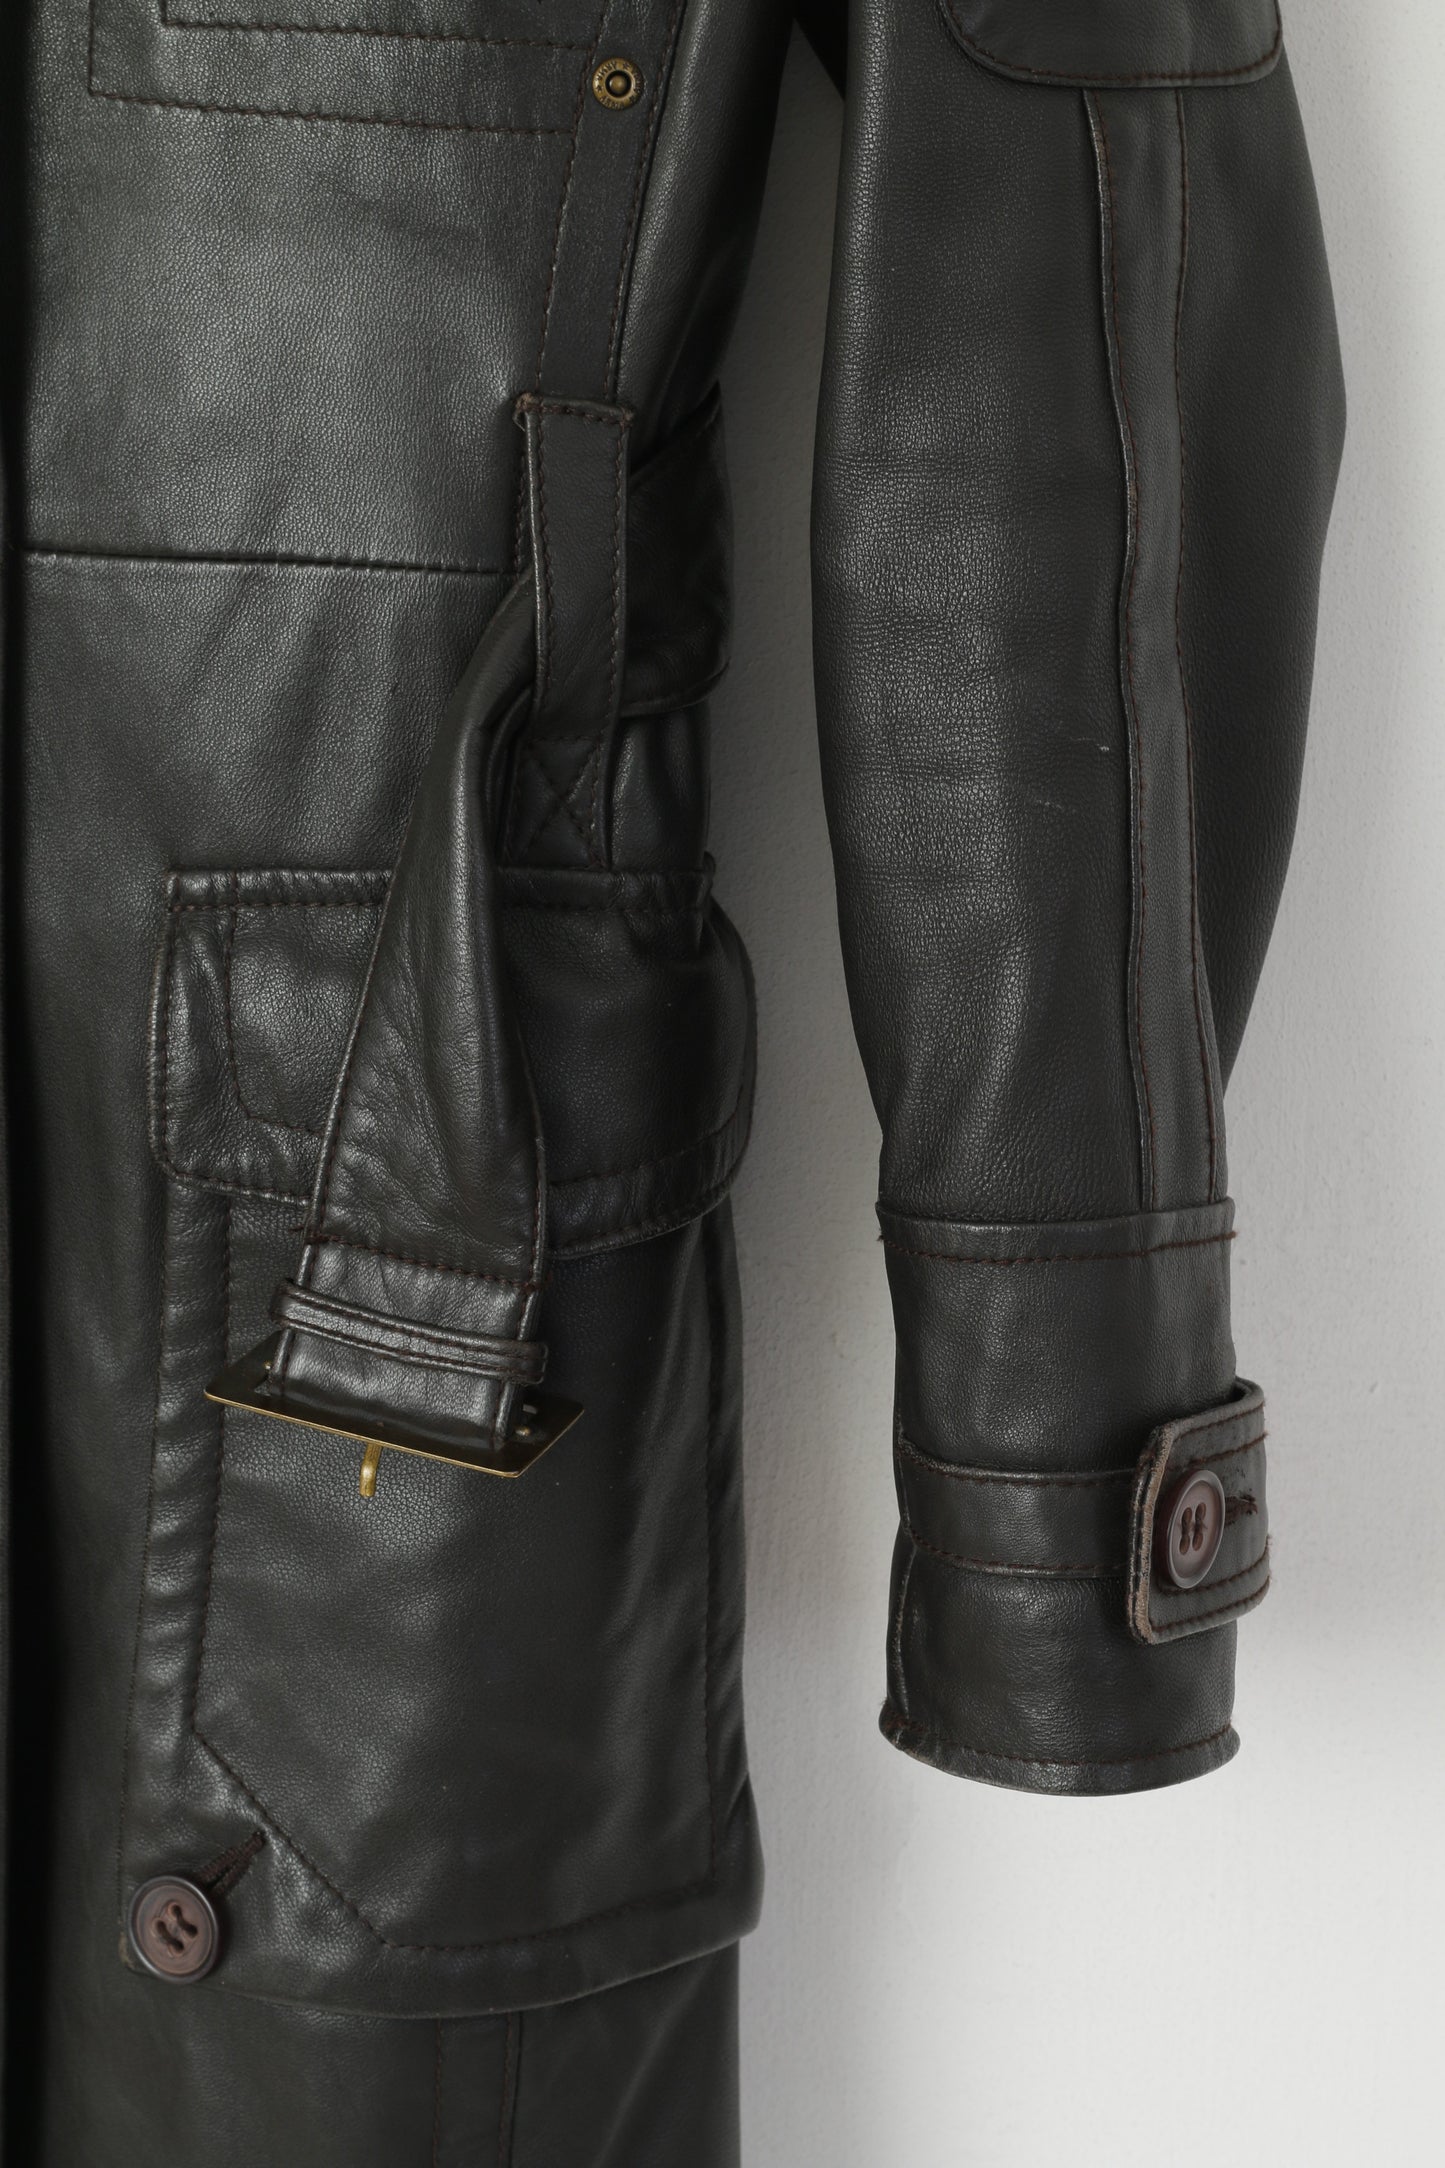 Arma Women 36 8 S Jacket Brown Soft Leather Full Zip Retro Belted Biker Coat